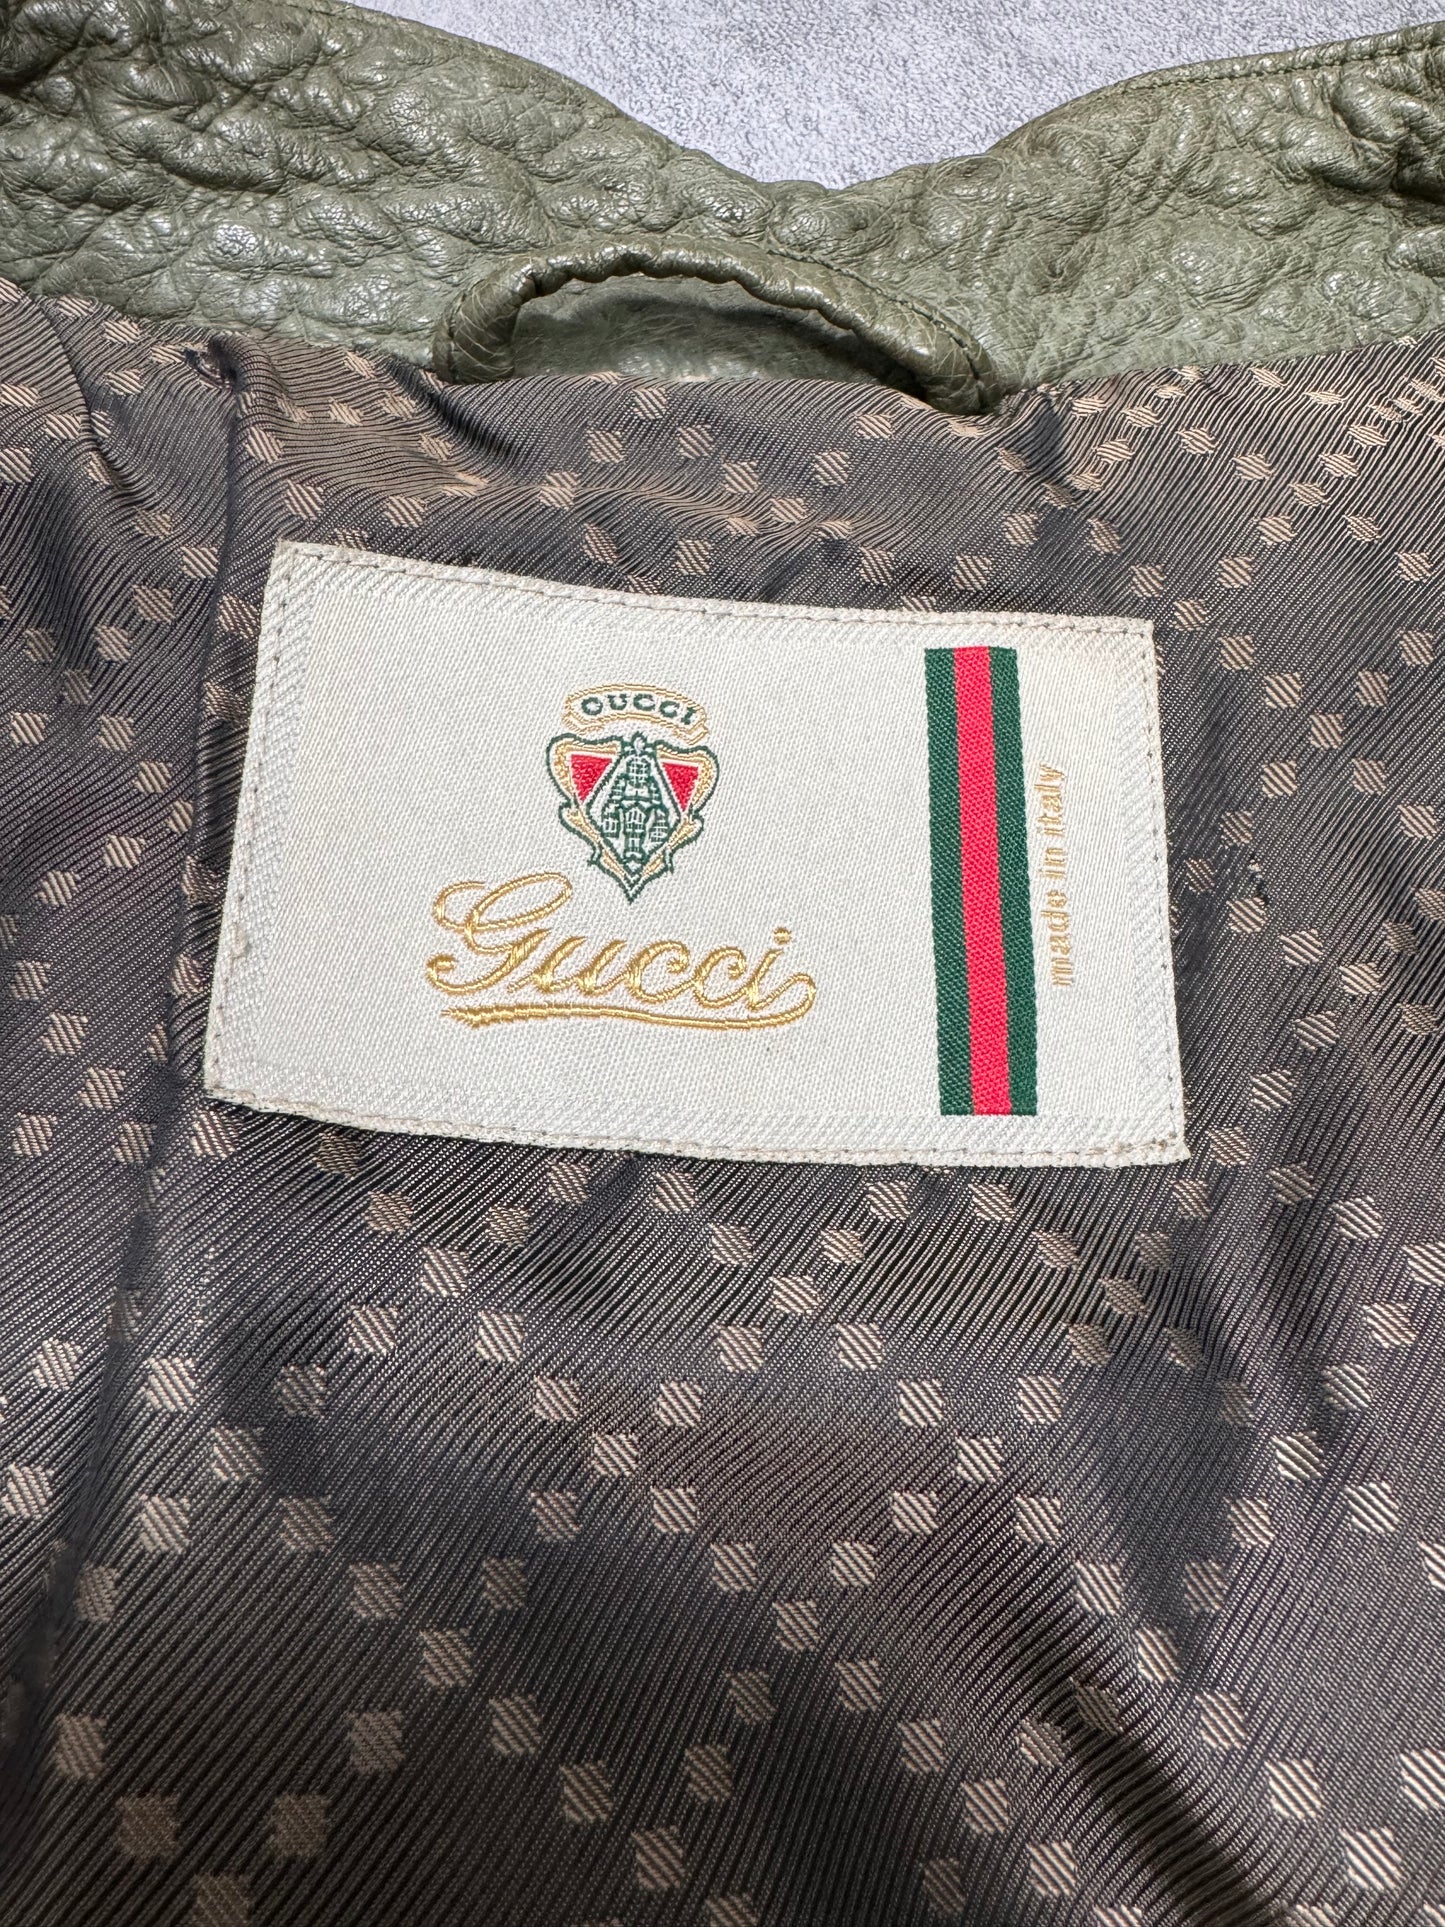 FW2011 Gucci Olive Ostrich Leather Biker Jacket (S/M)